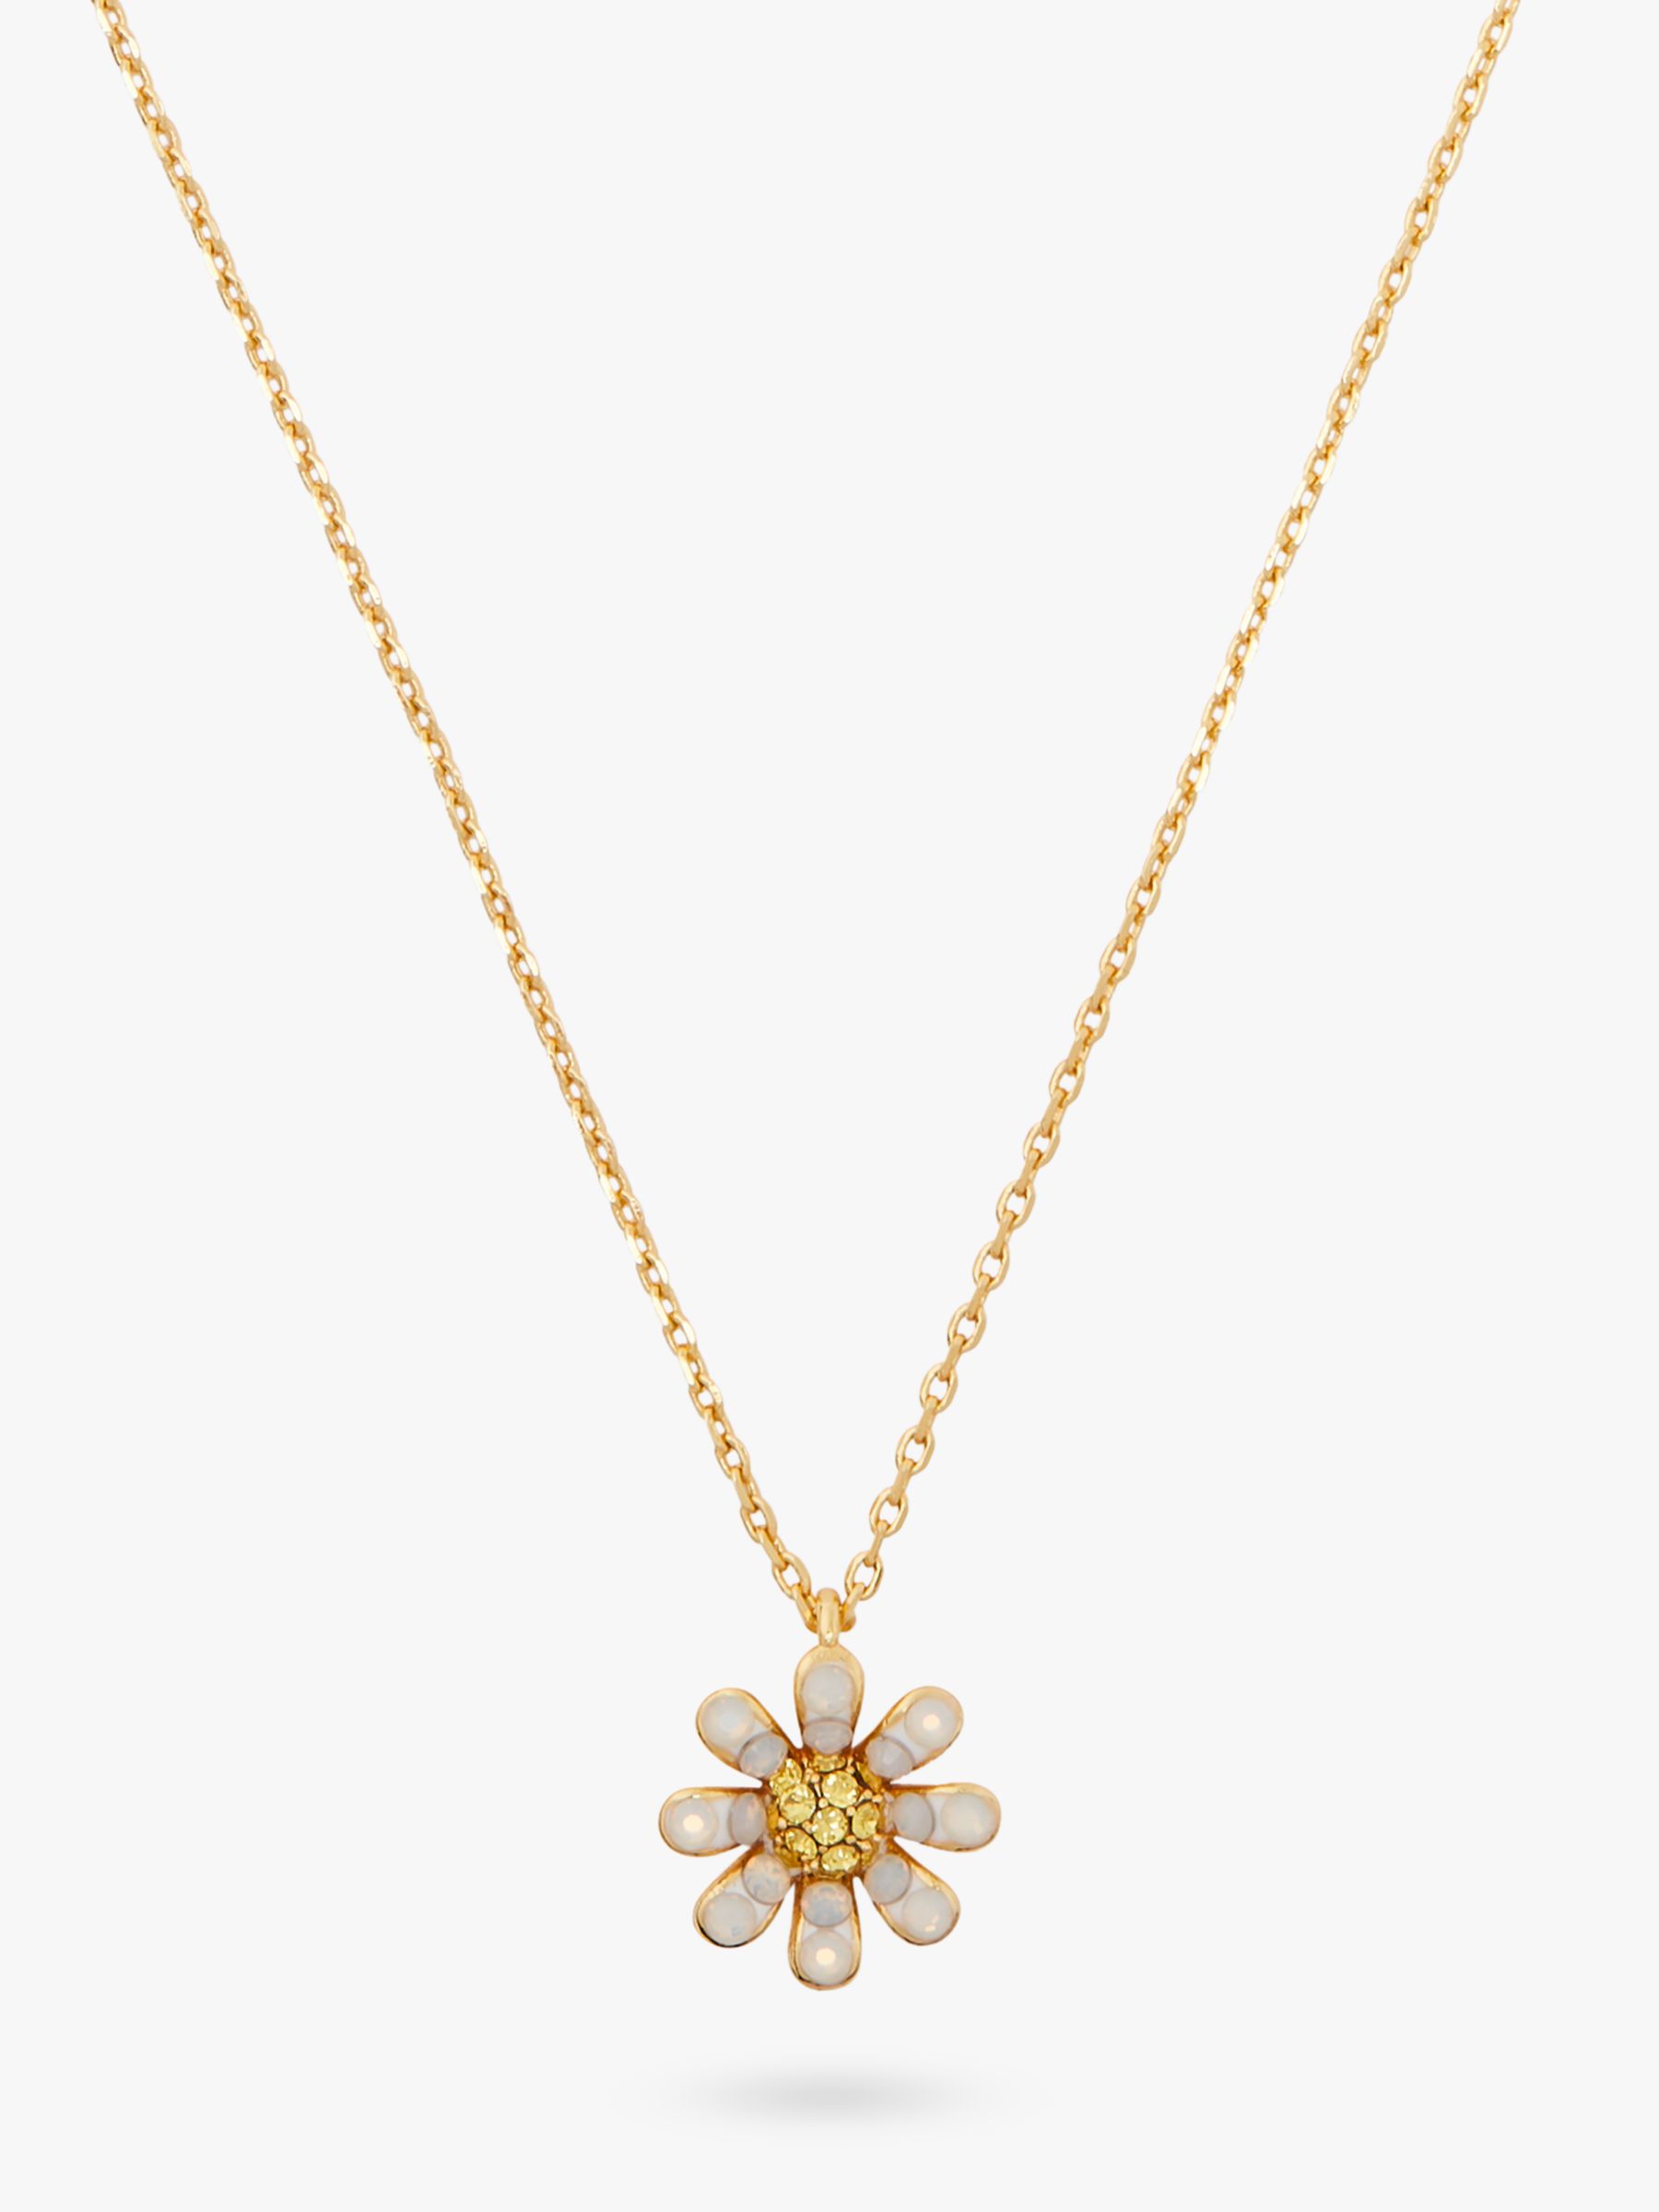 kate spade new york Daisy Pendant Necklace, Gold